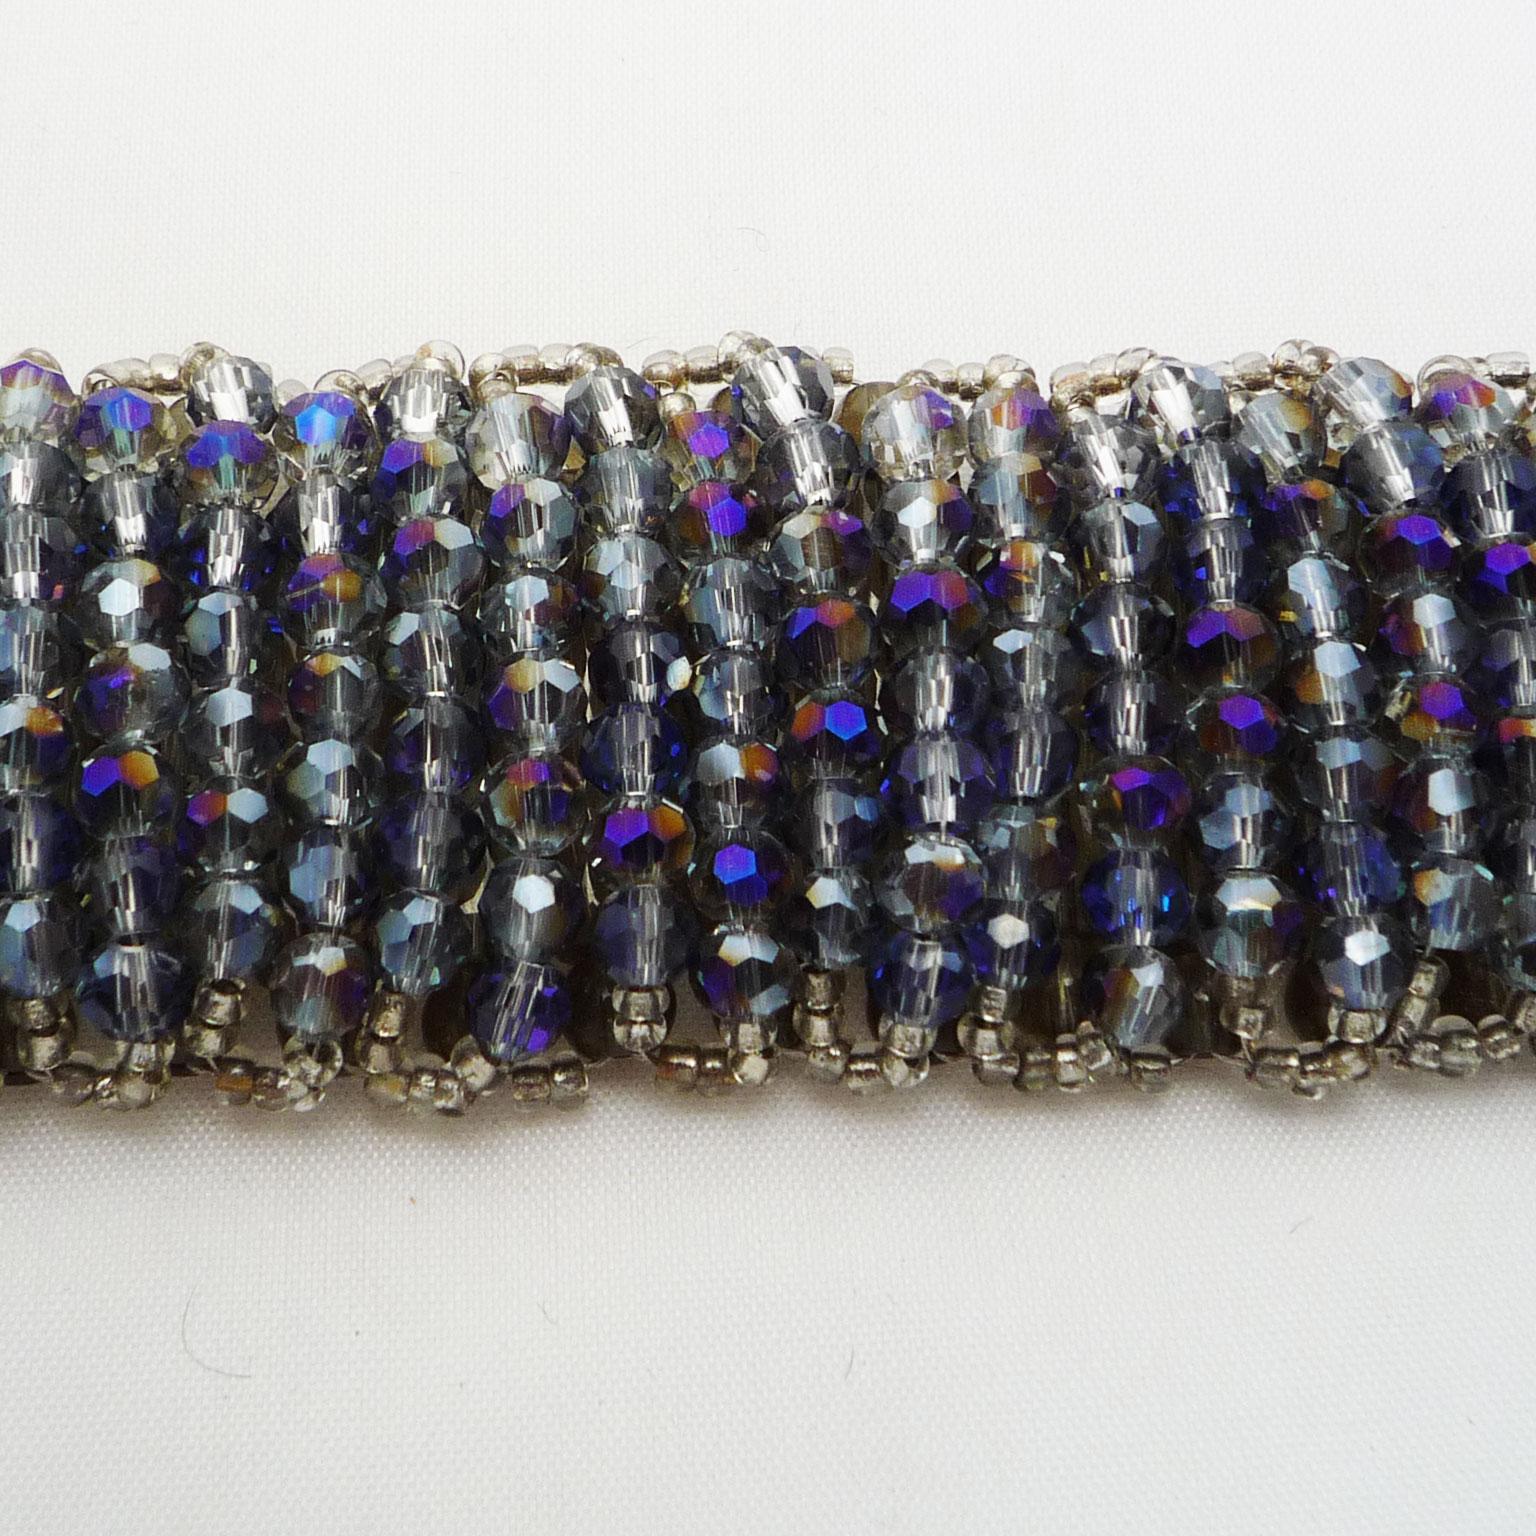 Modern Bracelet made of Svarowsky stones